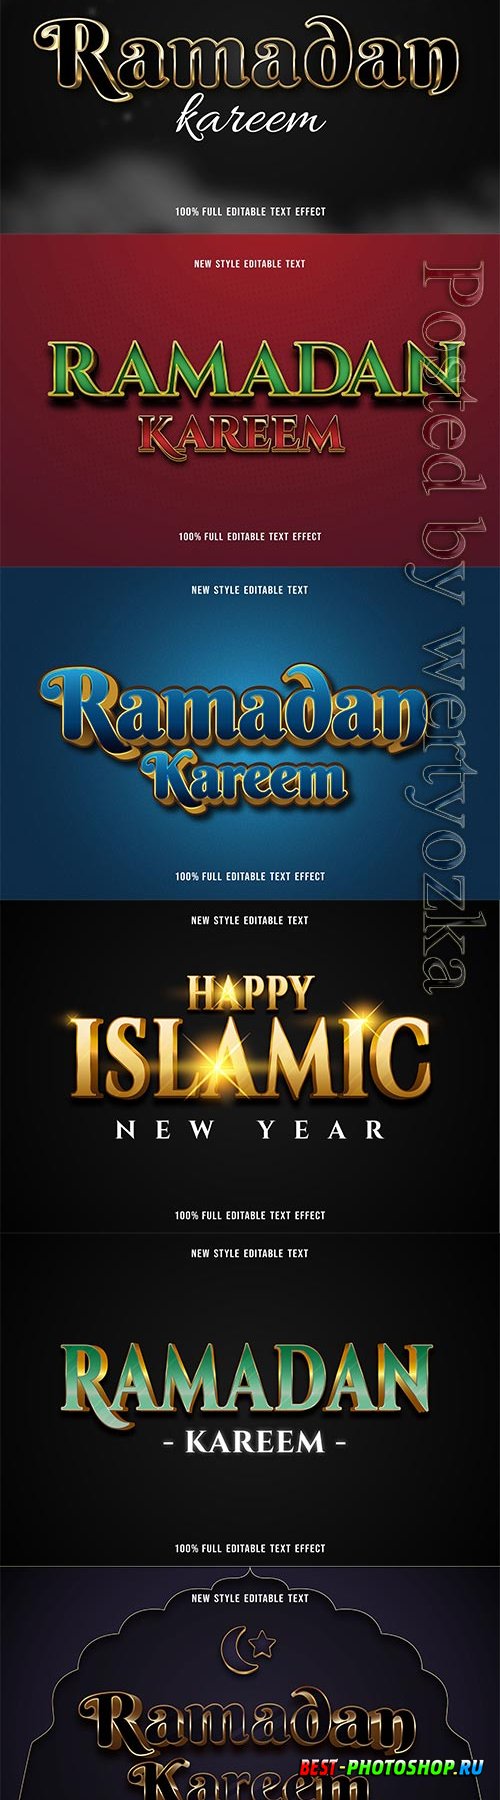 Ramadan kareem, eid mubarak vector text effect vol 4